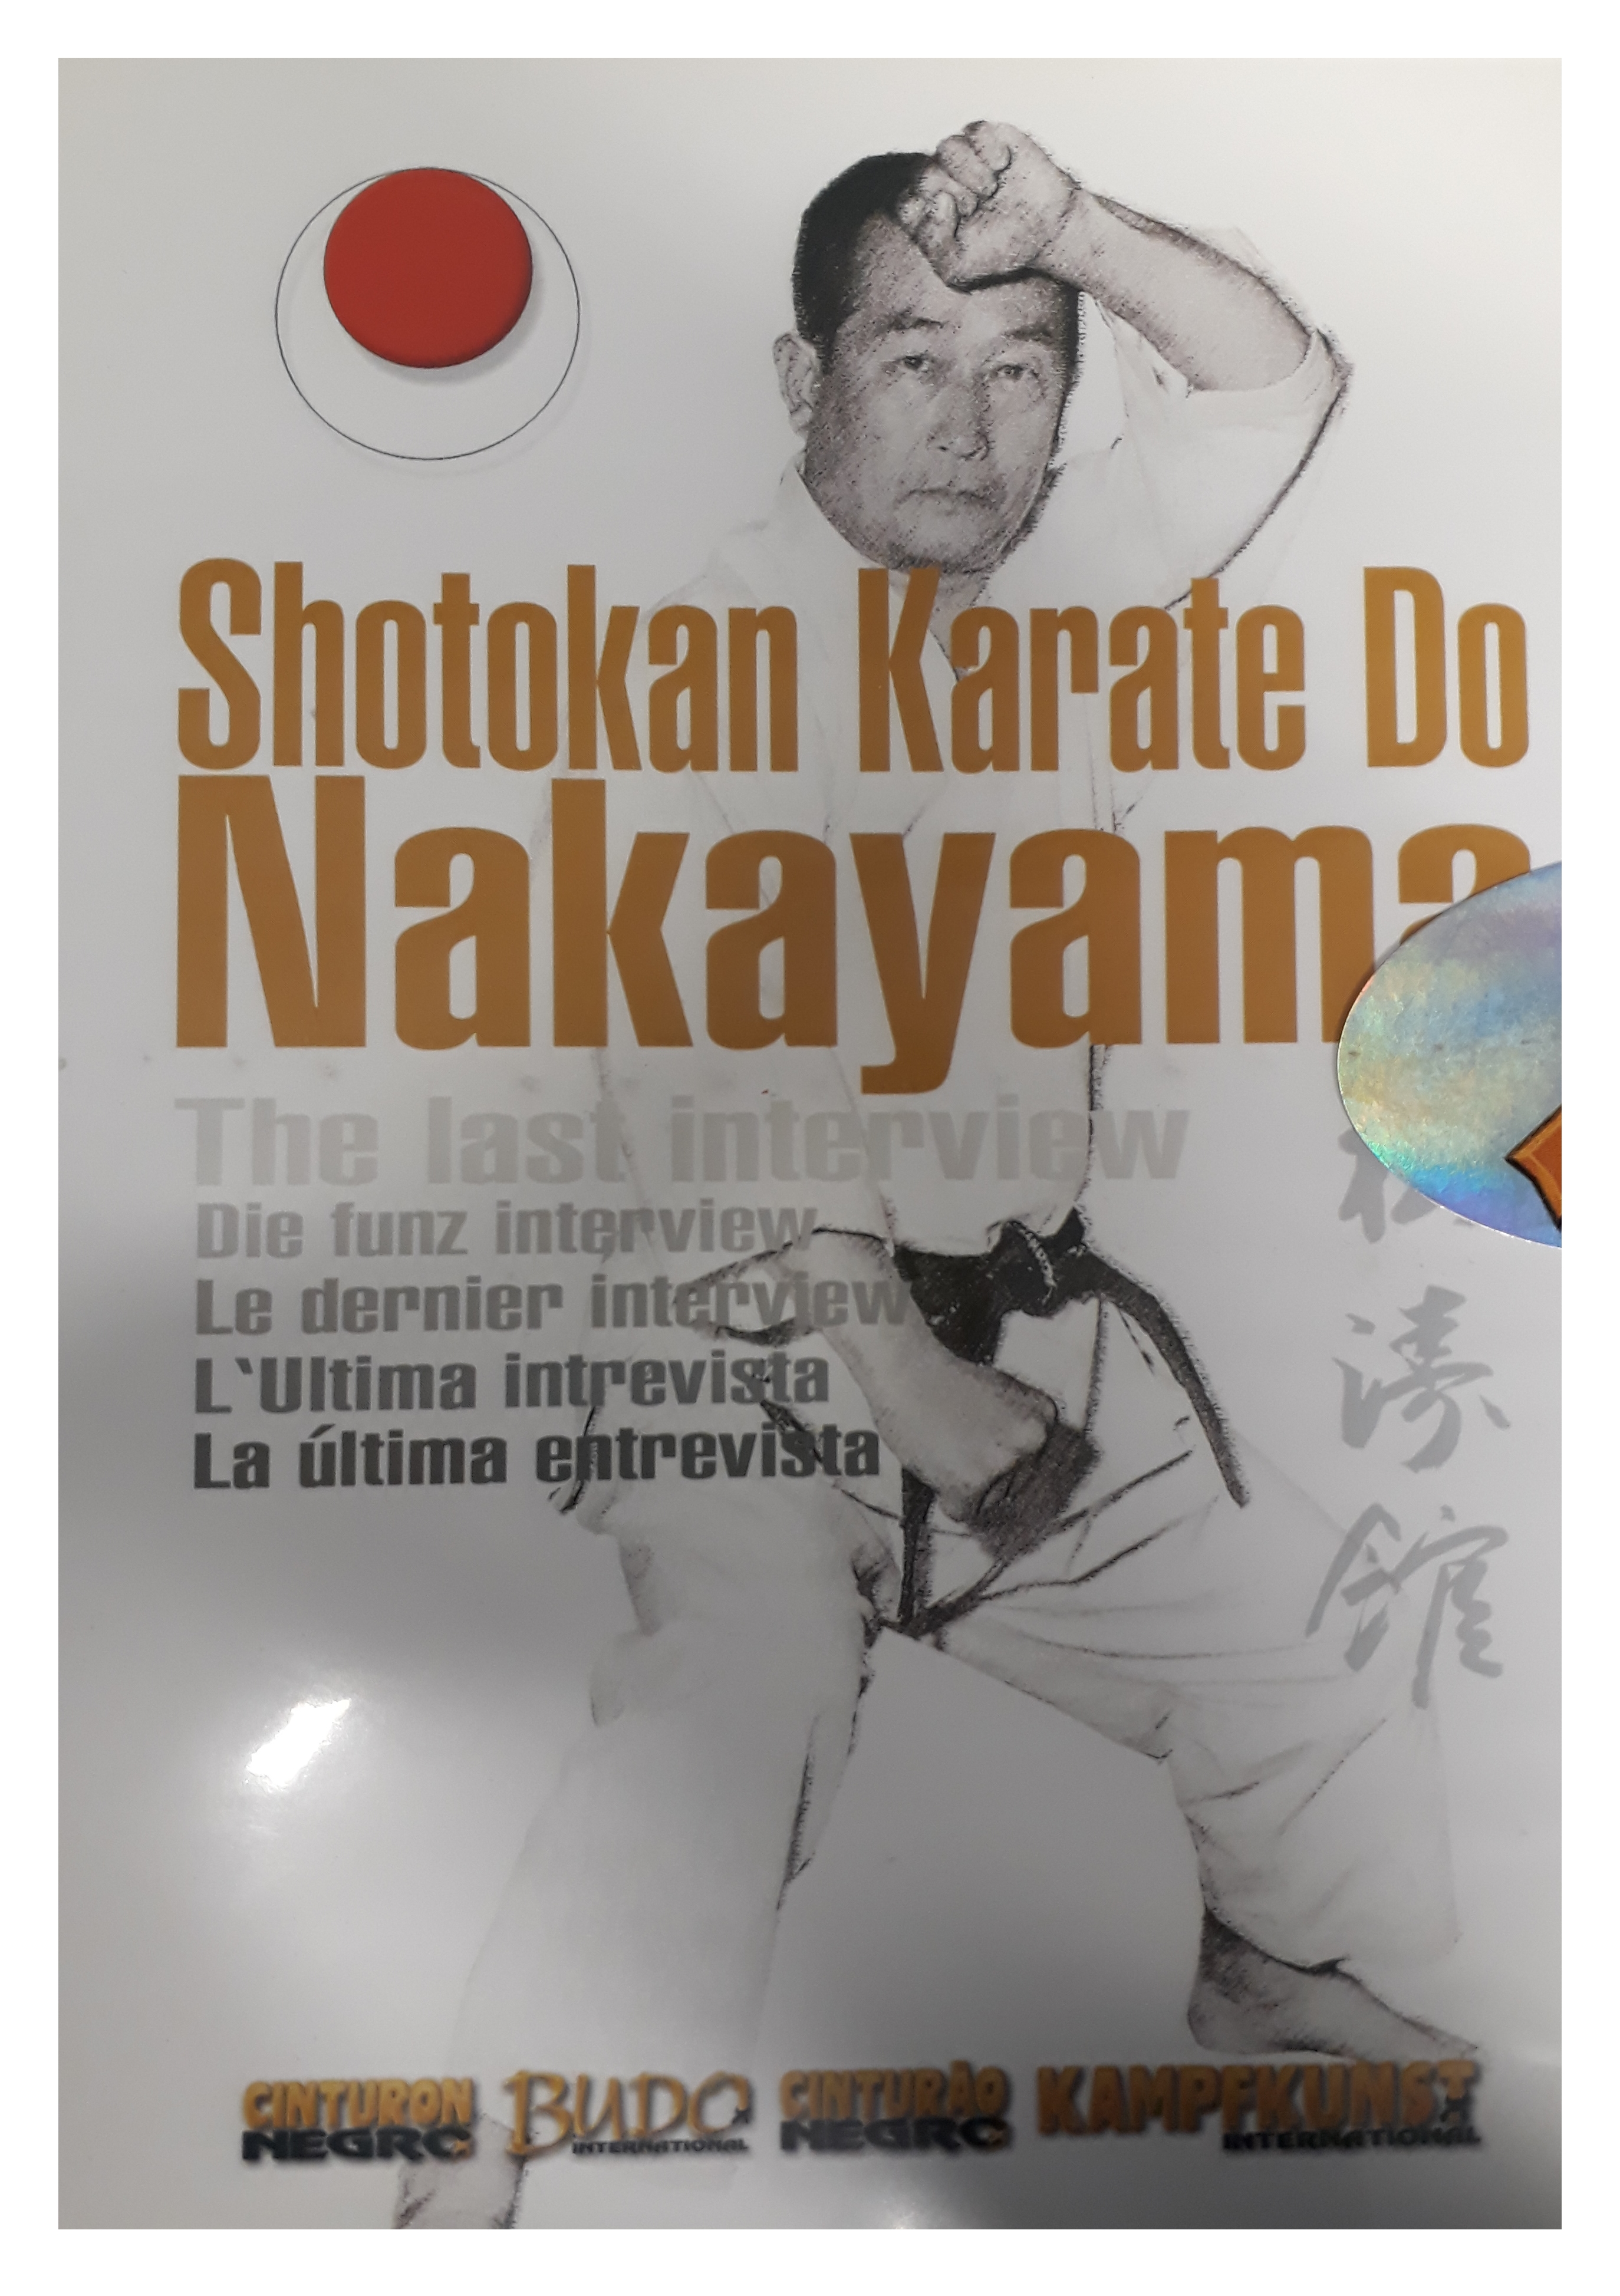 DVD Shotokan Karate Do Nakayama - The last Interview